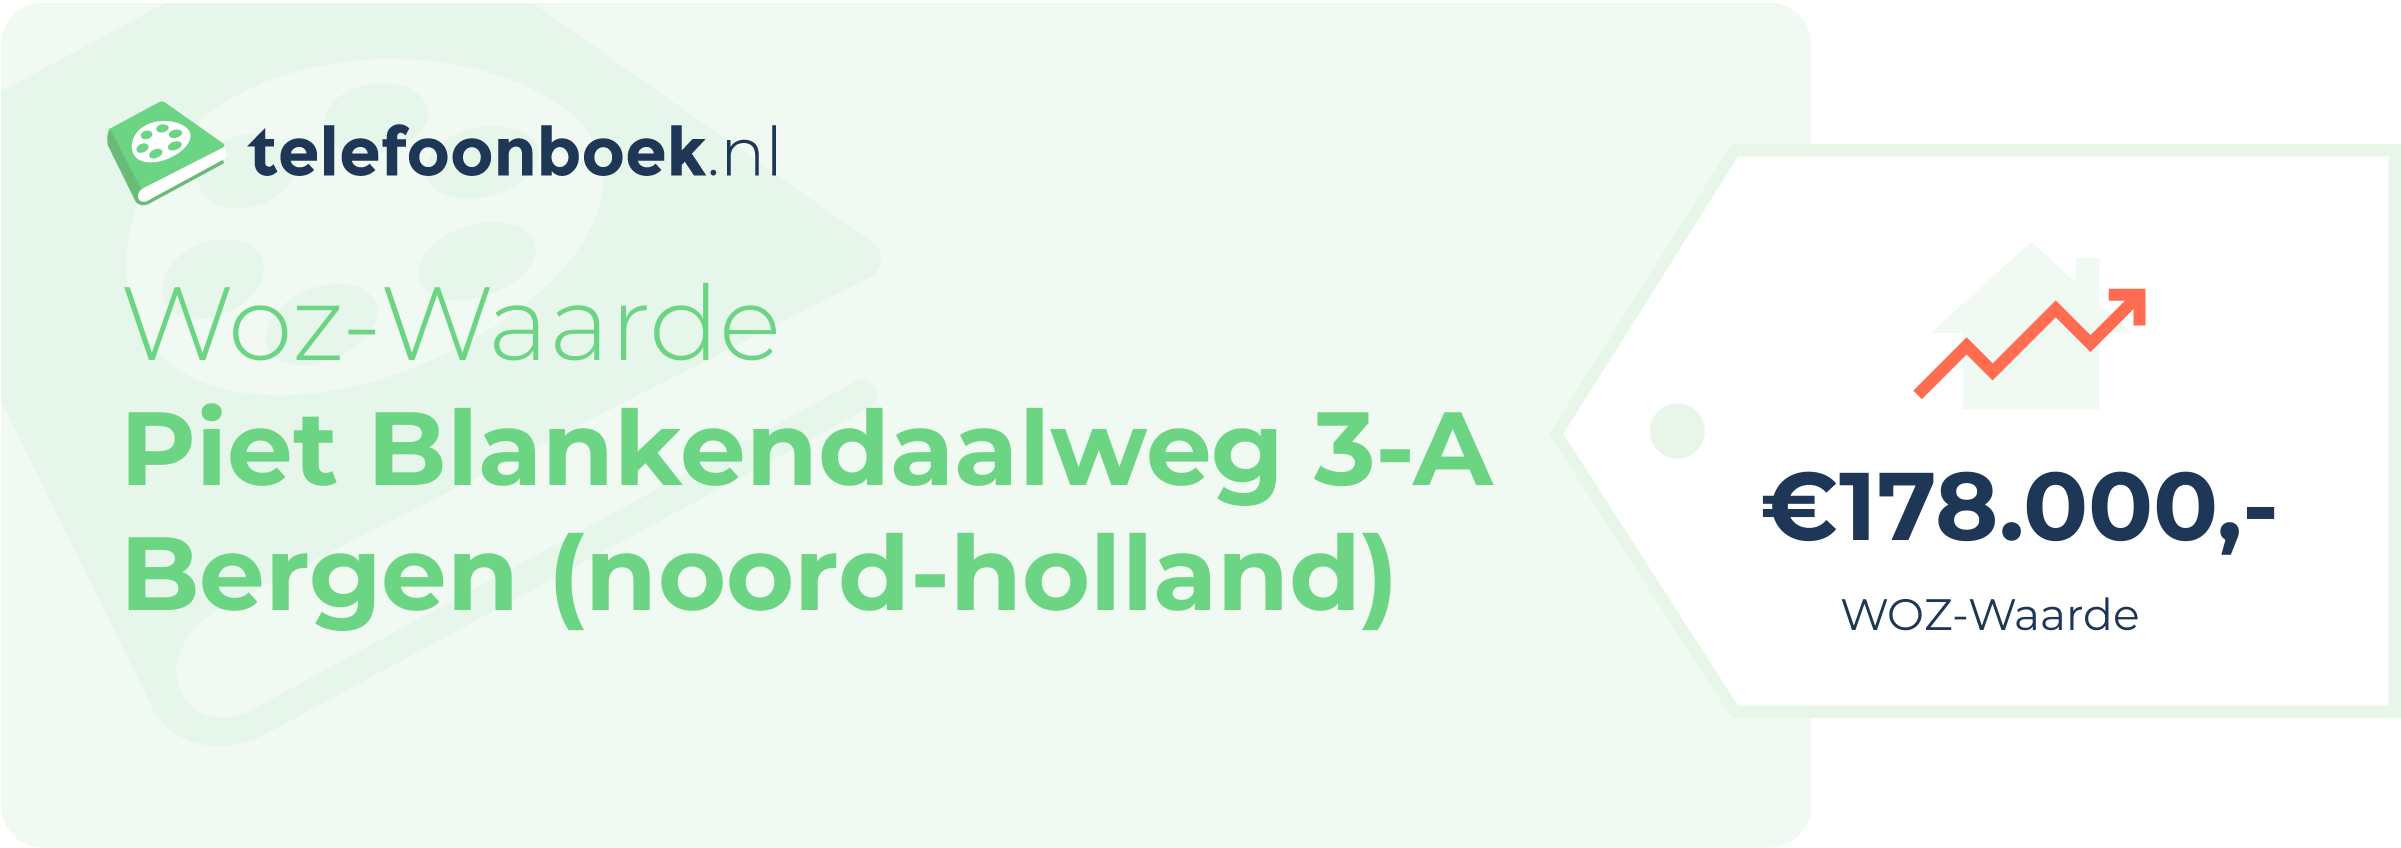 WOZ-waarde Piet Blankendaalweg 3-A Bergen (Noord-Holland)